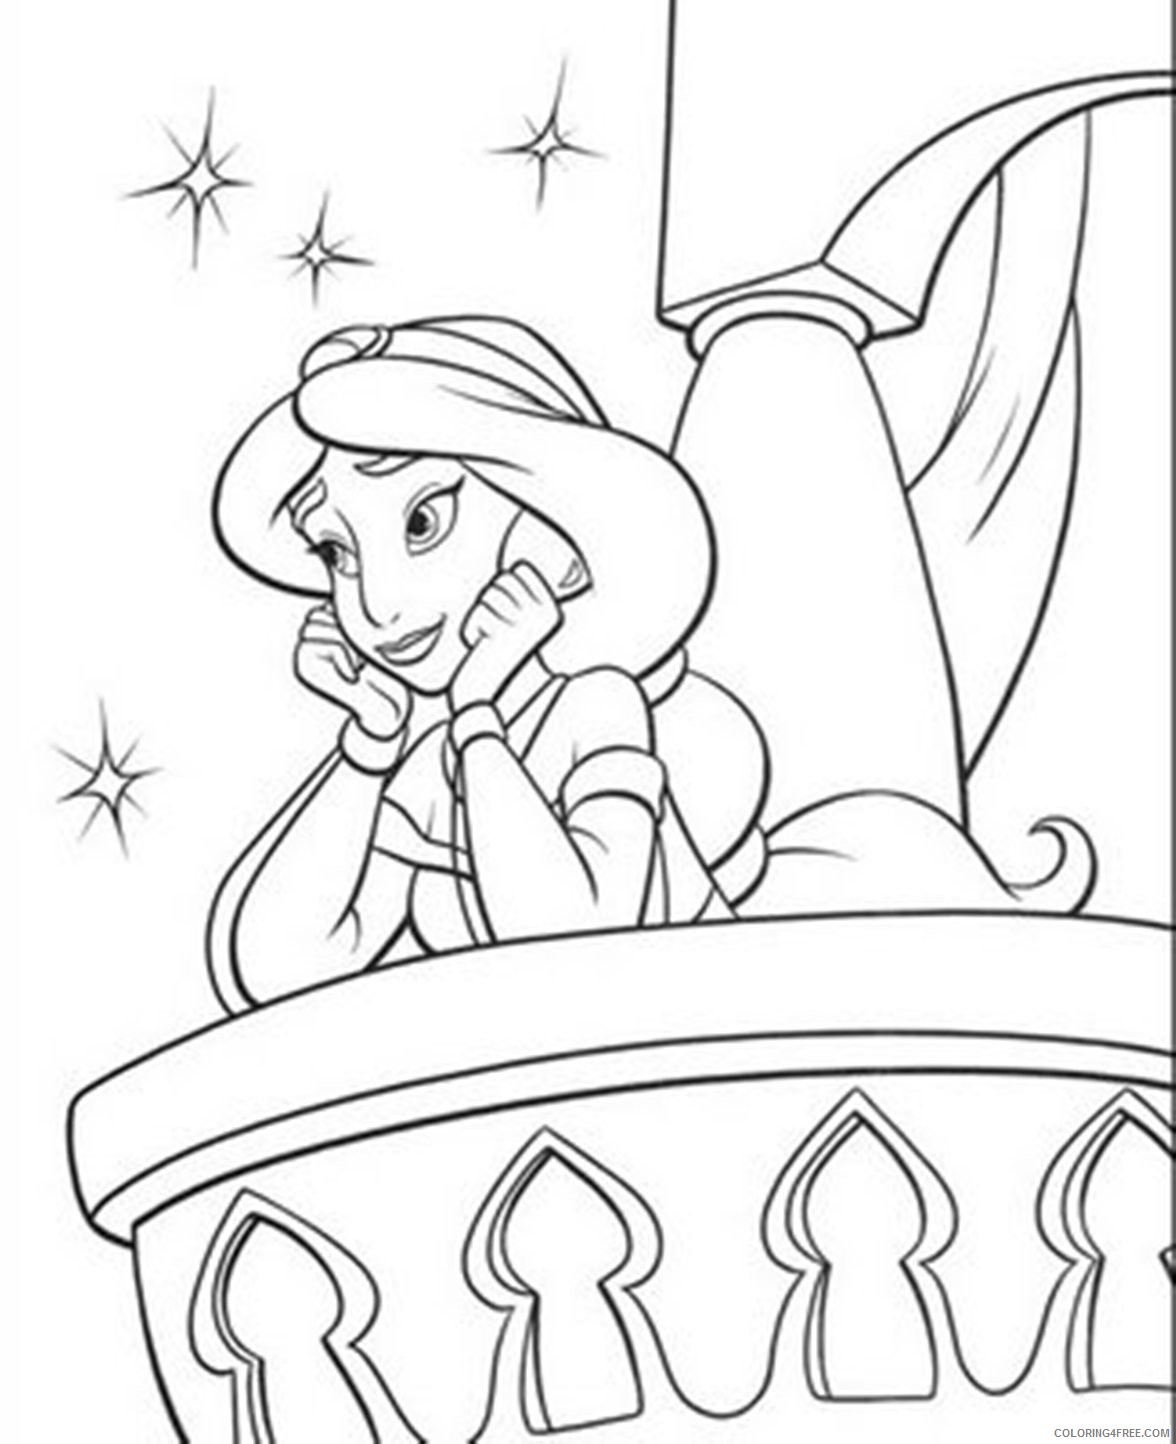 disney aladdin coloring pages princess jasmine Coloring4free